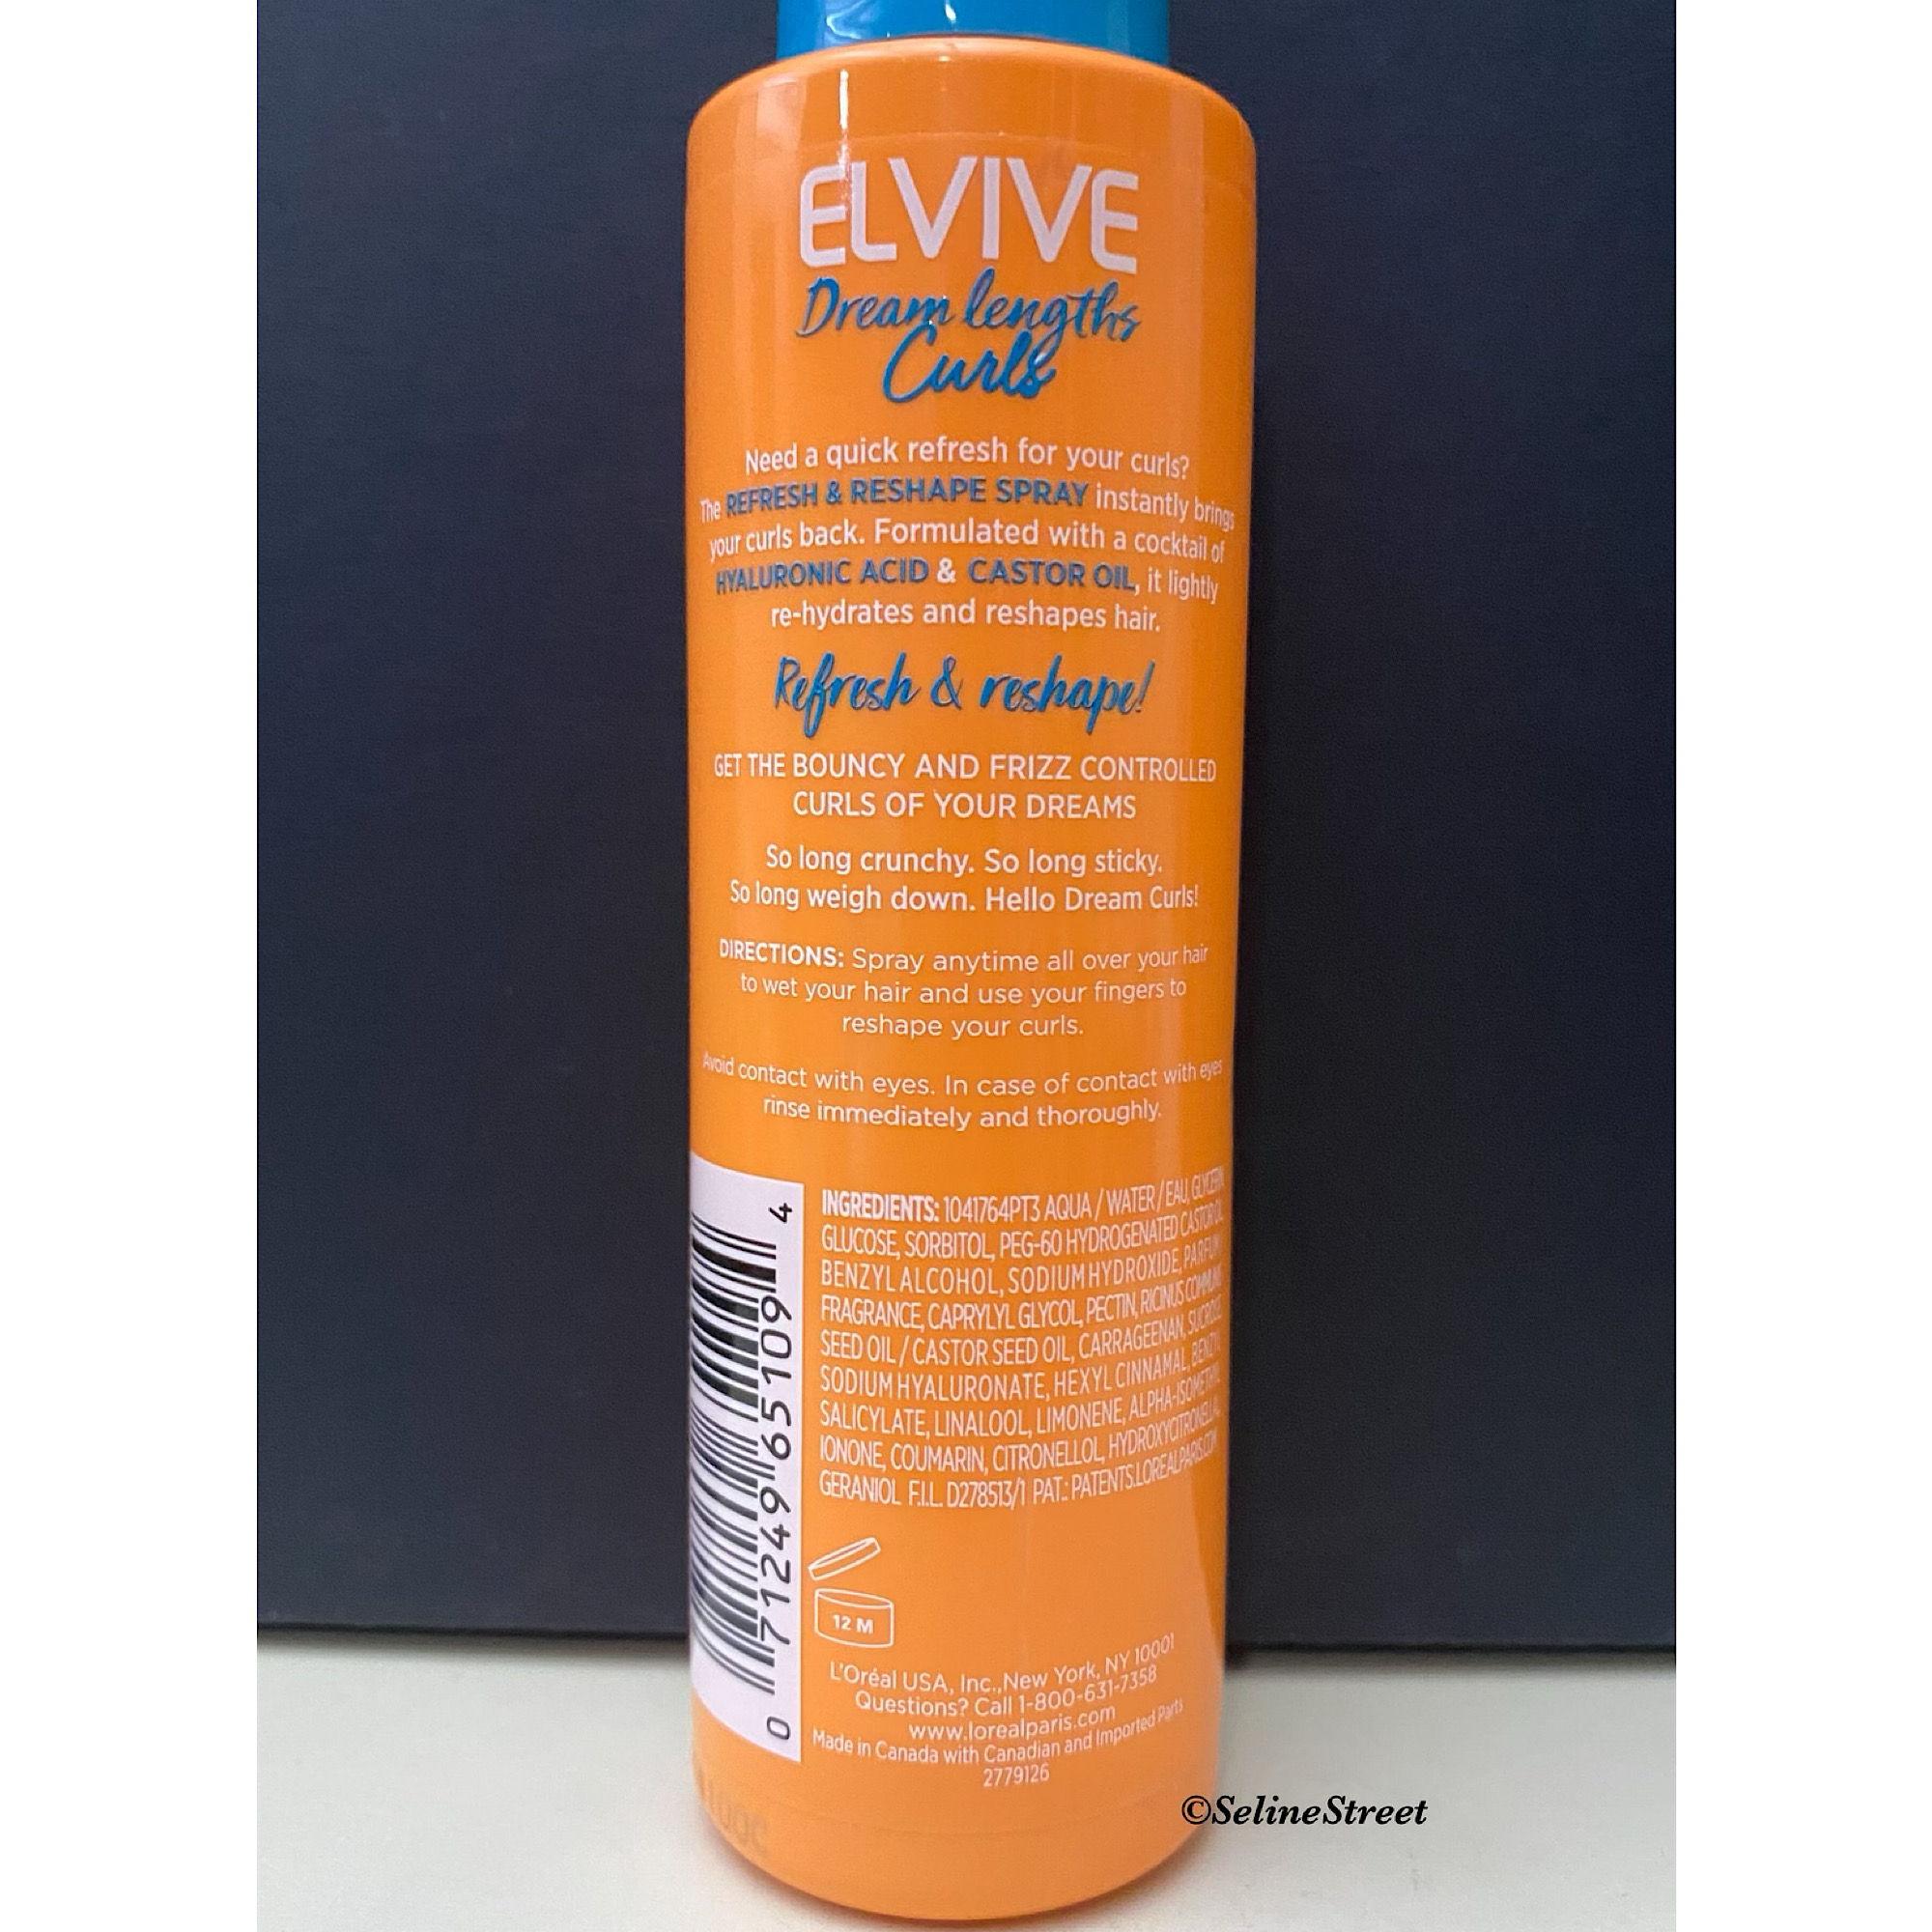 Elvive, Dream Lengths Curls, Refresh & Reshape Leave-In Spray, 4.4 fl oz  (130 ml)